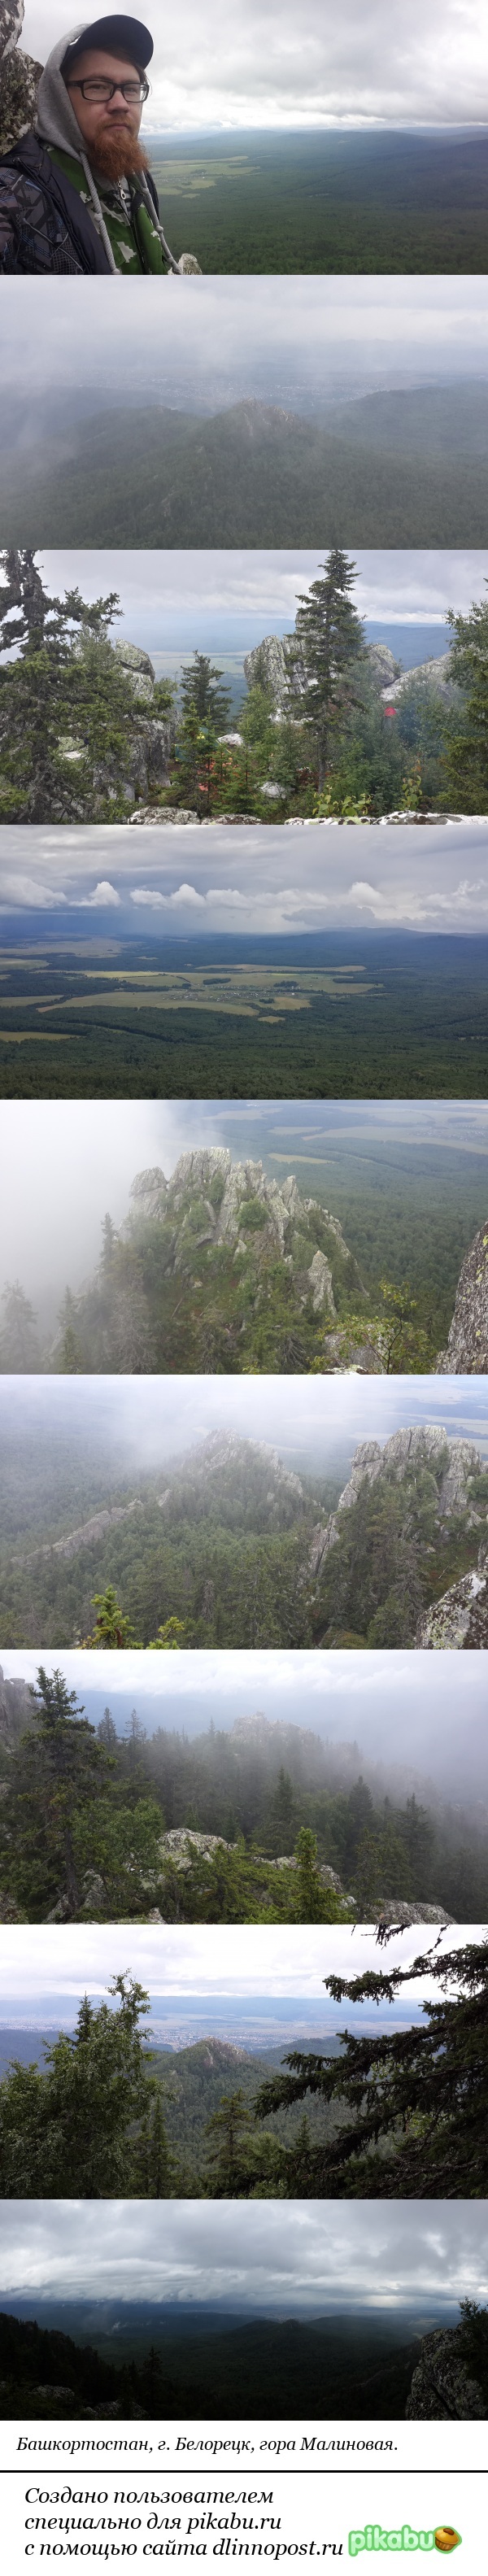 Naryl on a computer, last year's pictures from Malinovka) - My, The mountains, Forest, Fog, Beard, Bashkortostan, Beloretsk, Longpost